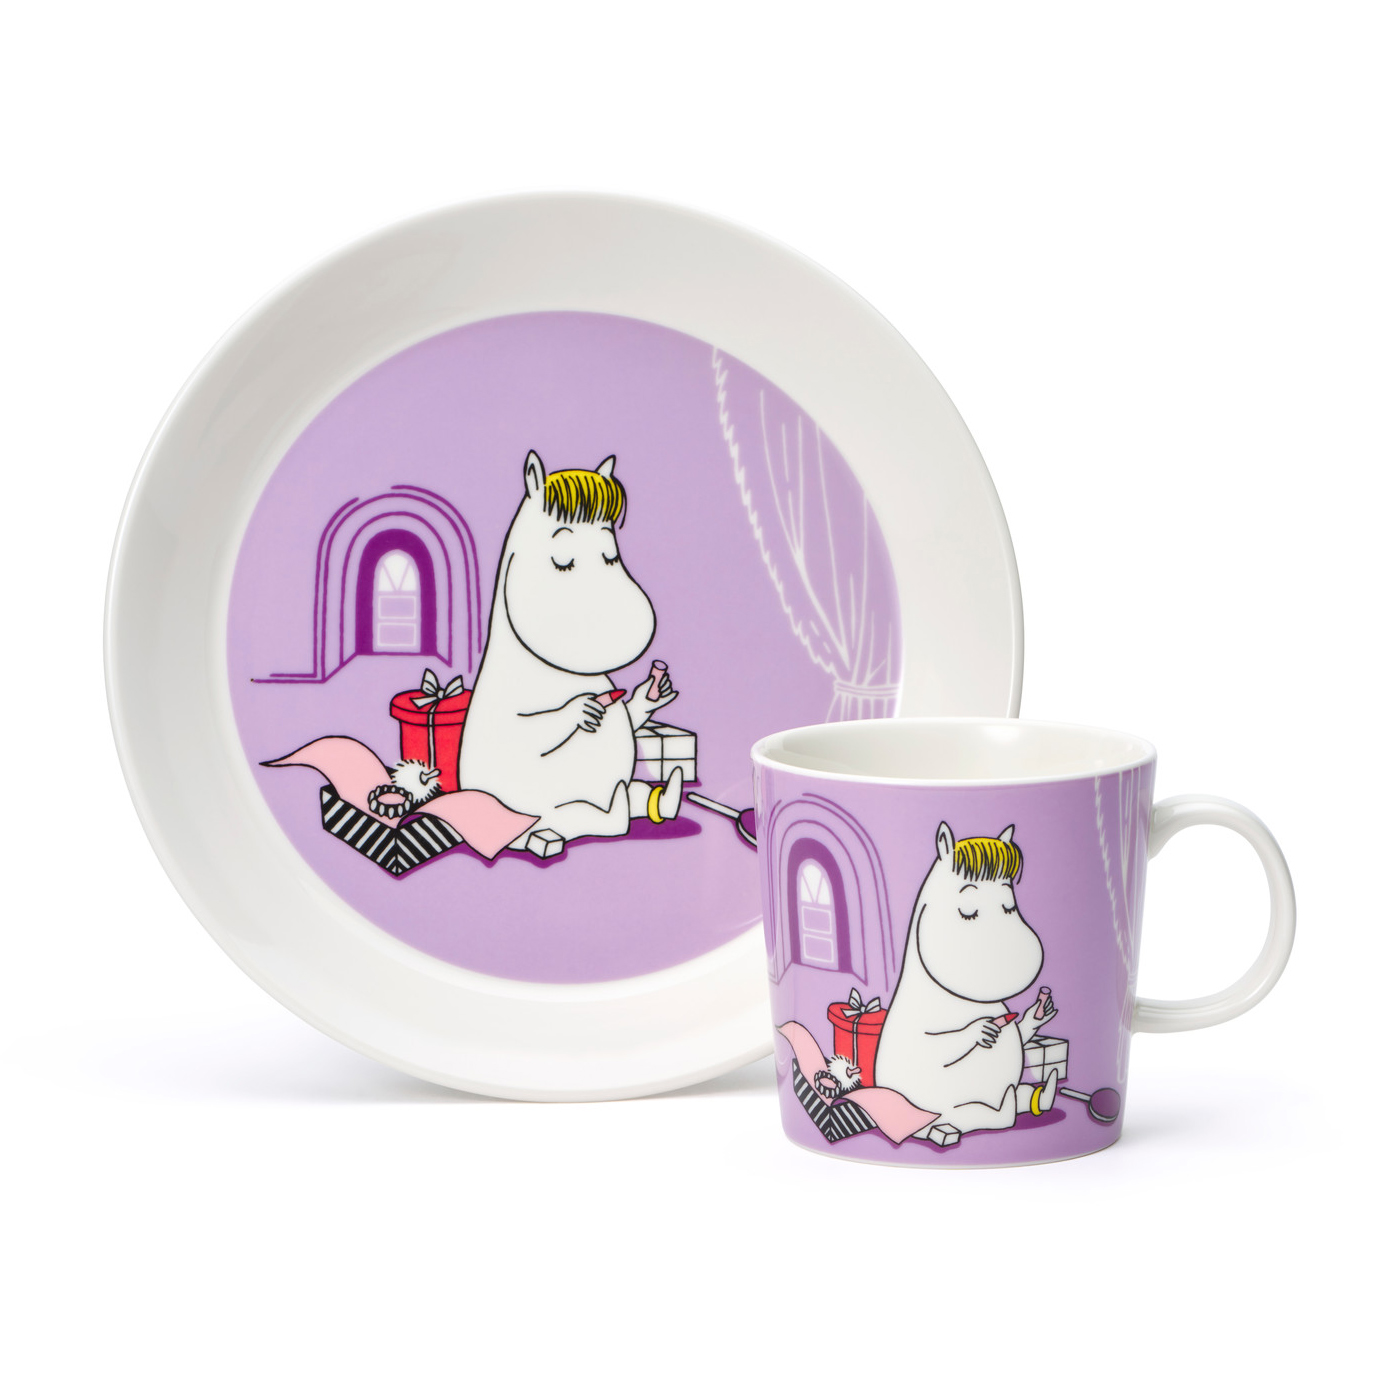 Plate Porcelain Arabia 1023462 Moomin Children's Sets 